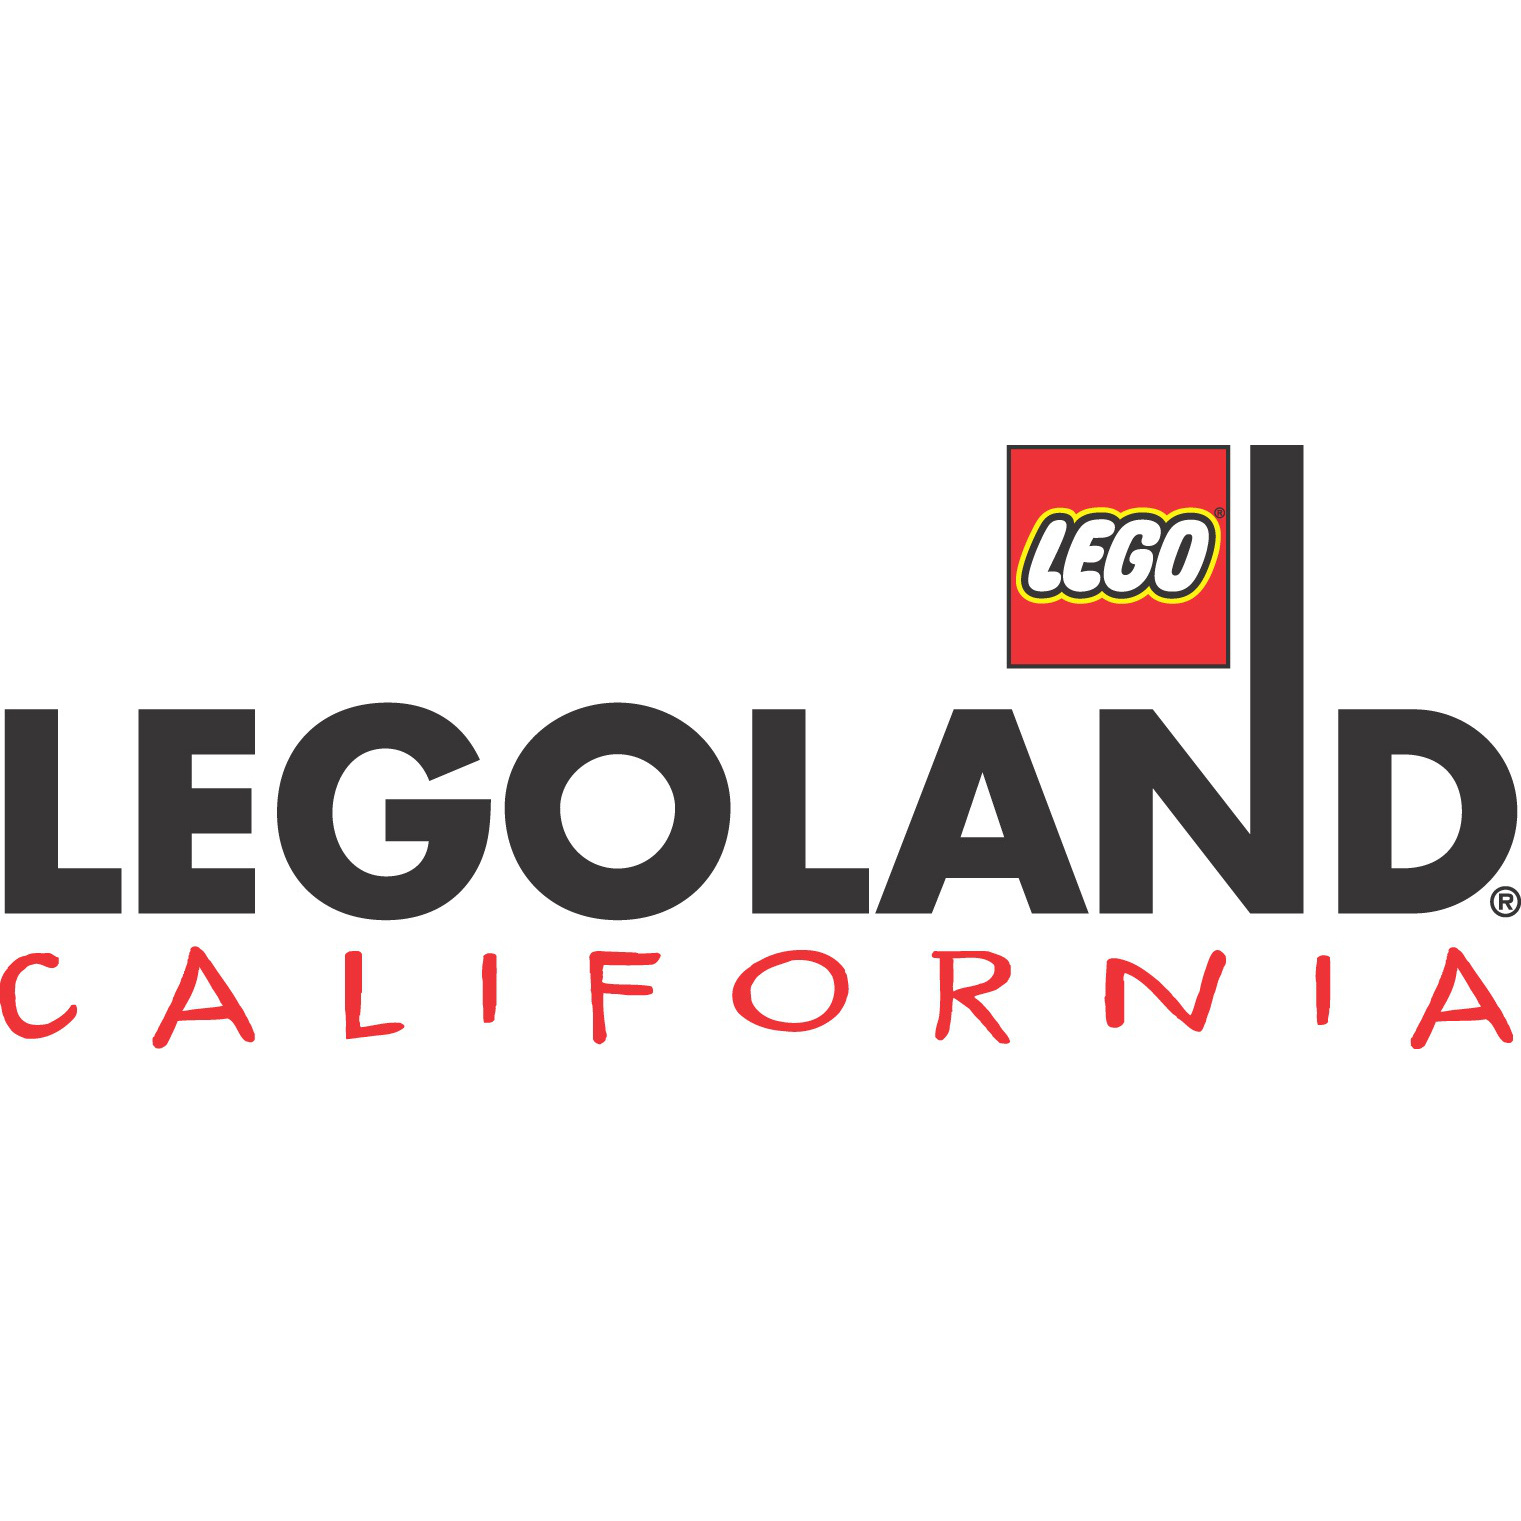 Legoland-california_logo